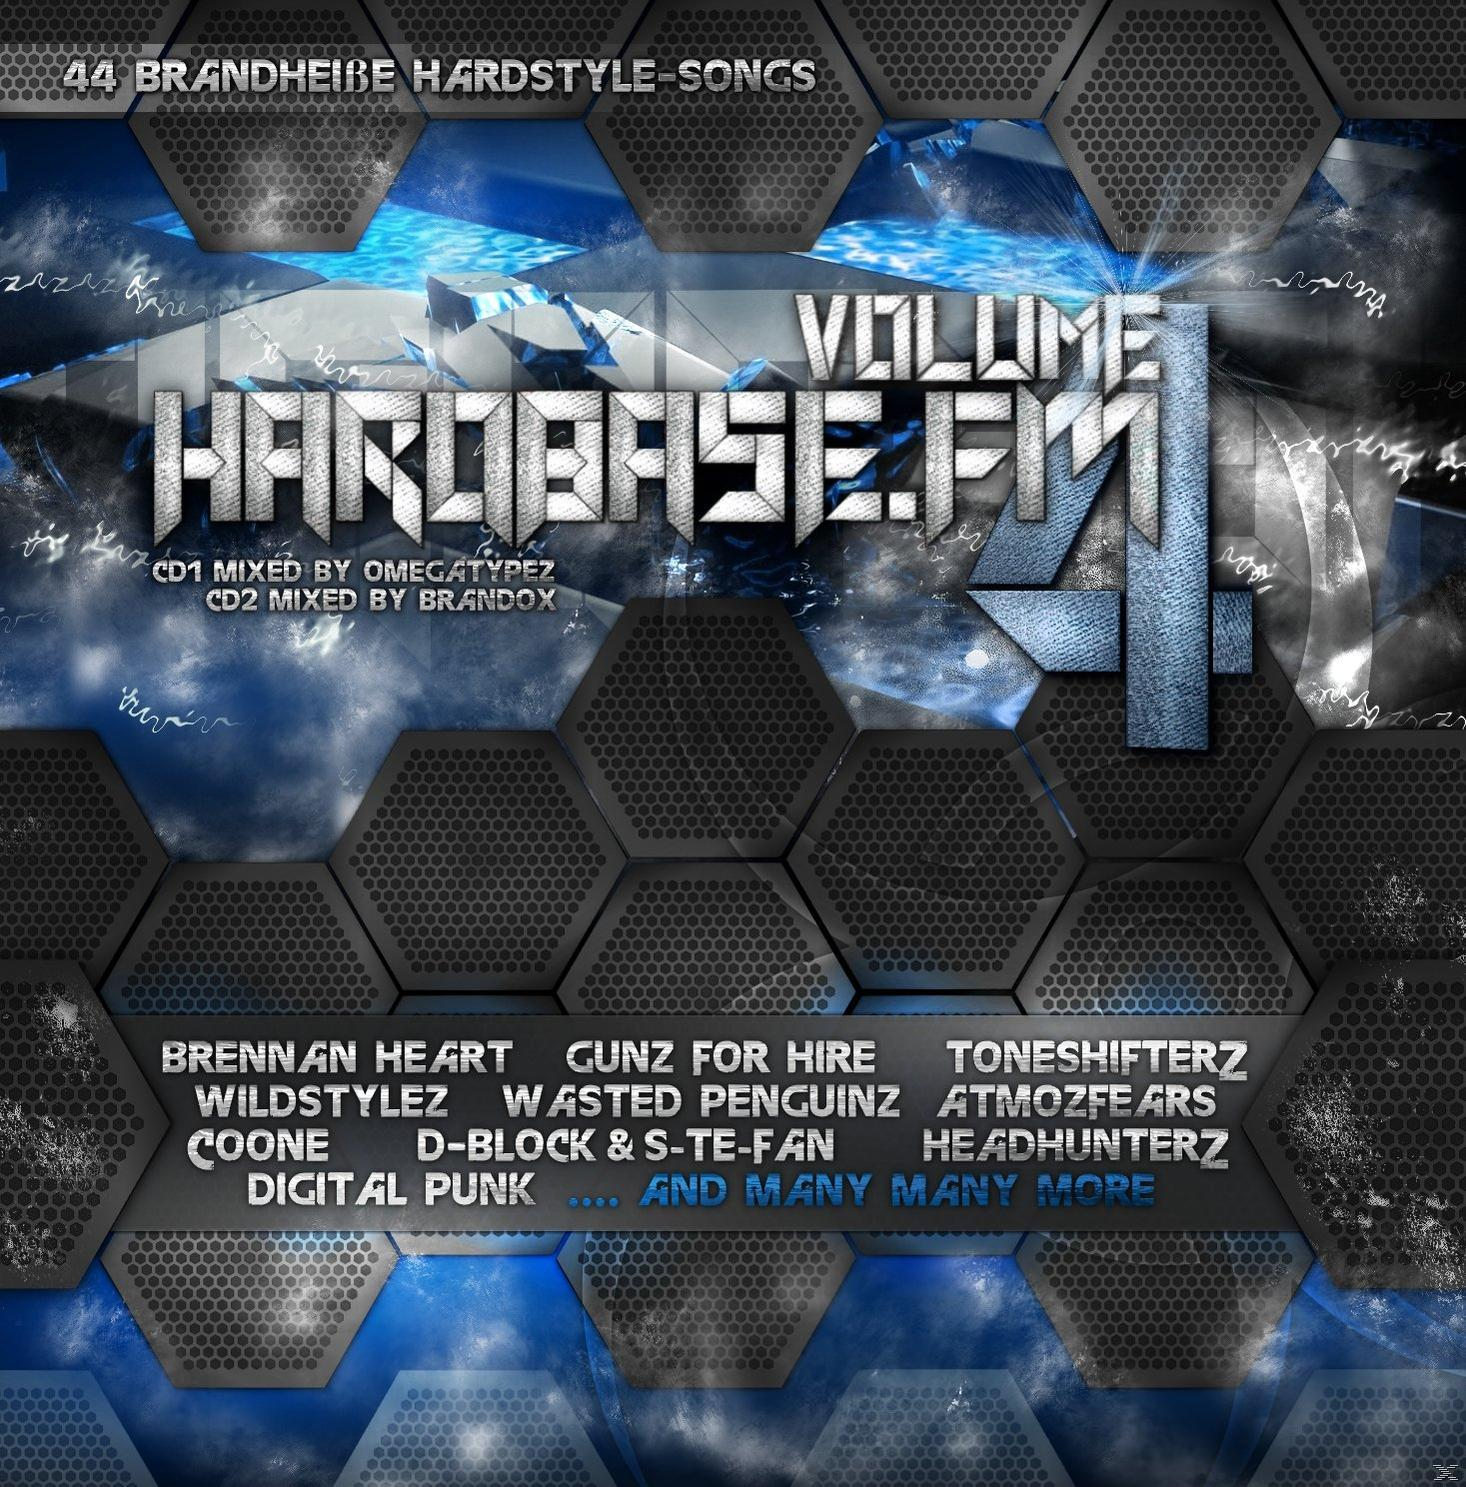 VARIOUS - Hardbase.Fm Volume Four! - (CD)